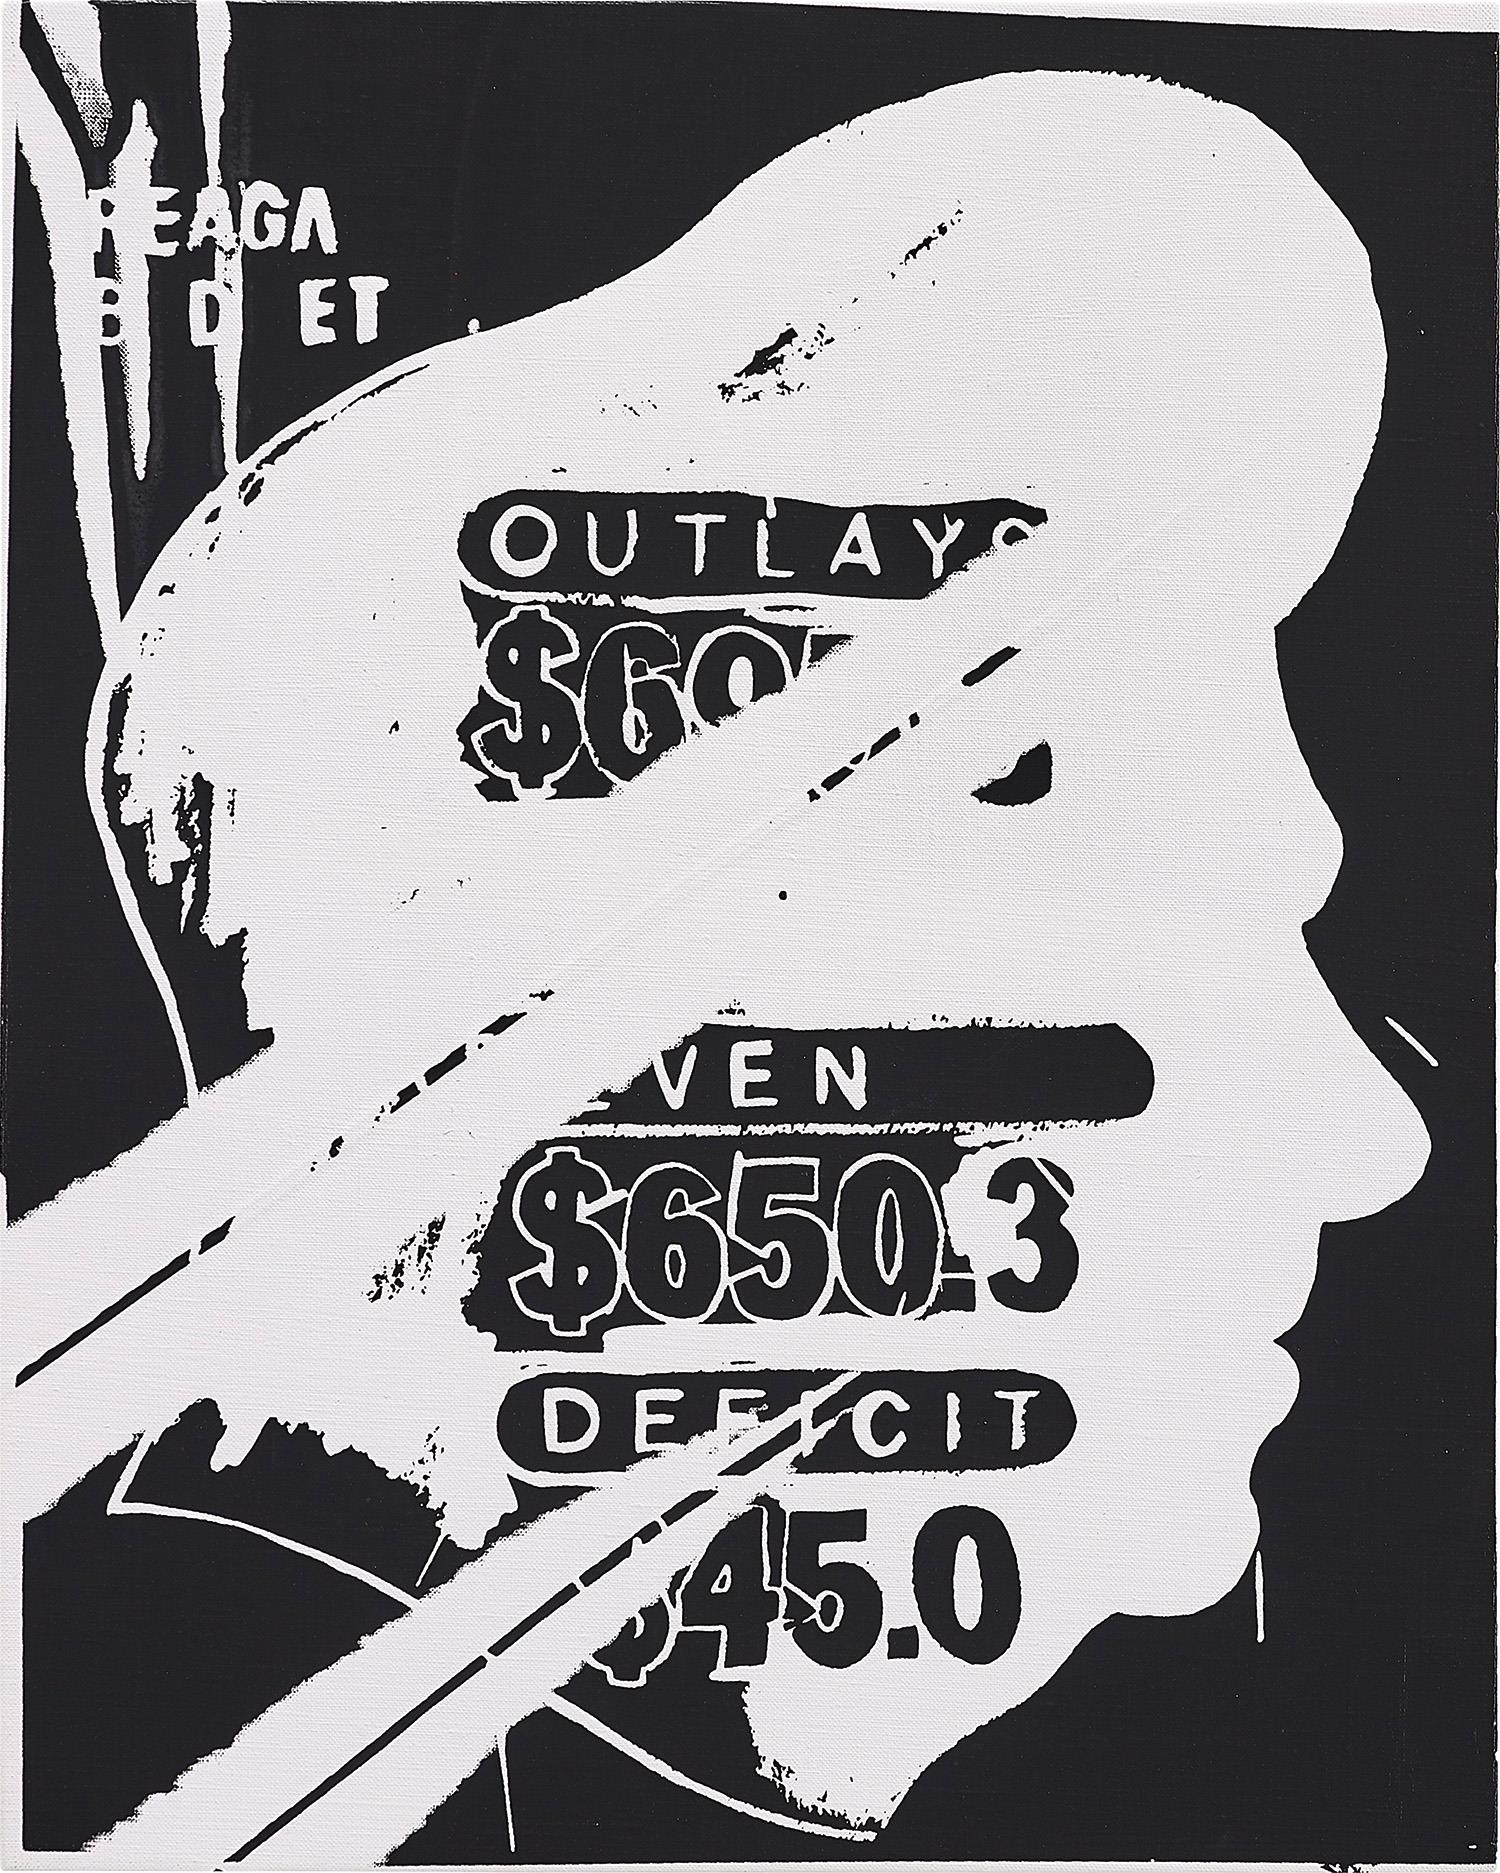 Reagan Budget by Andy Warhol, 1985-1986